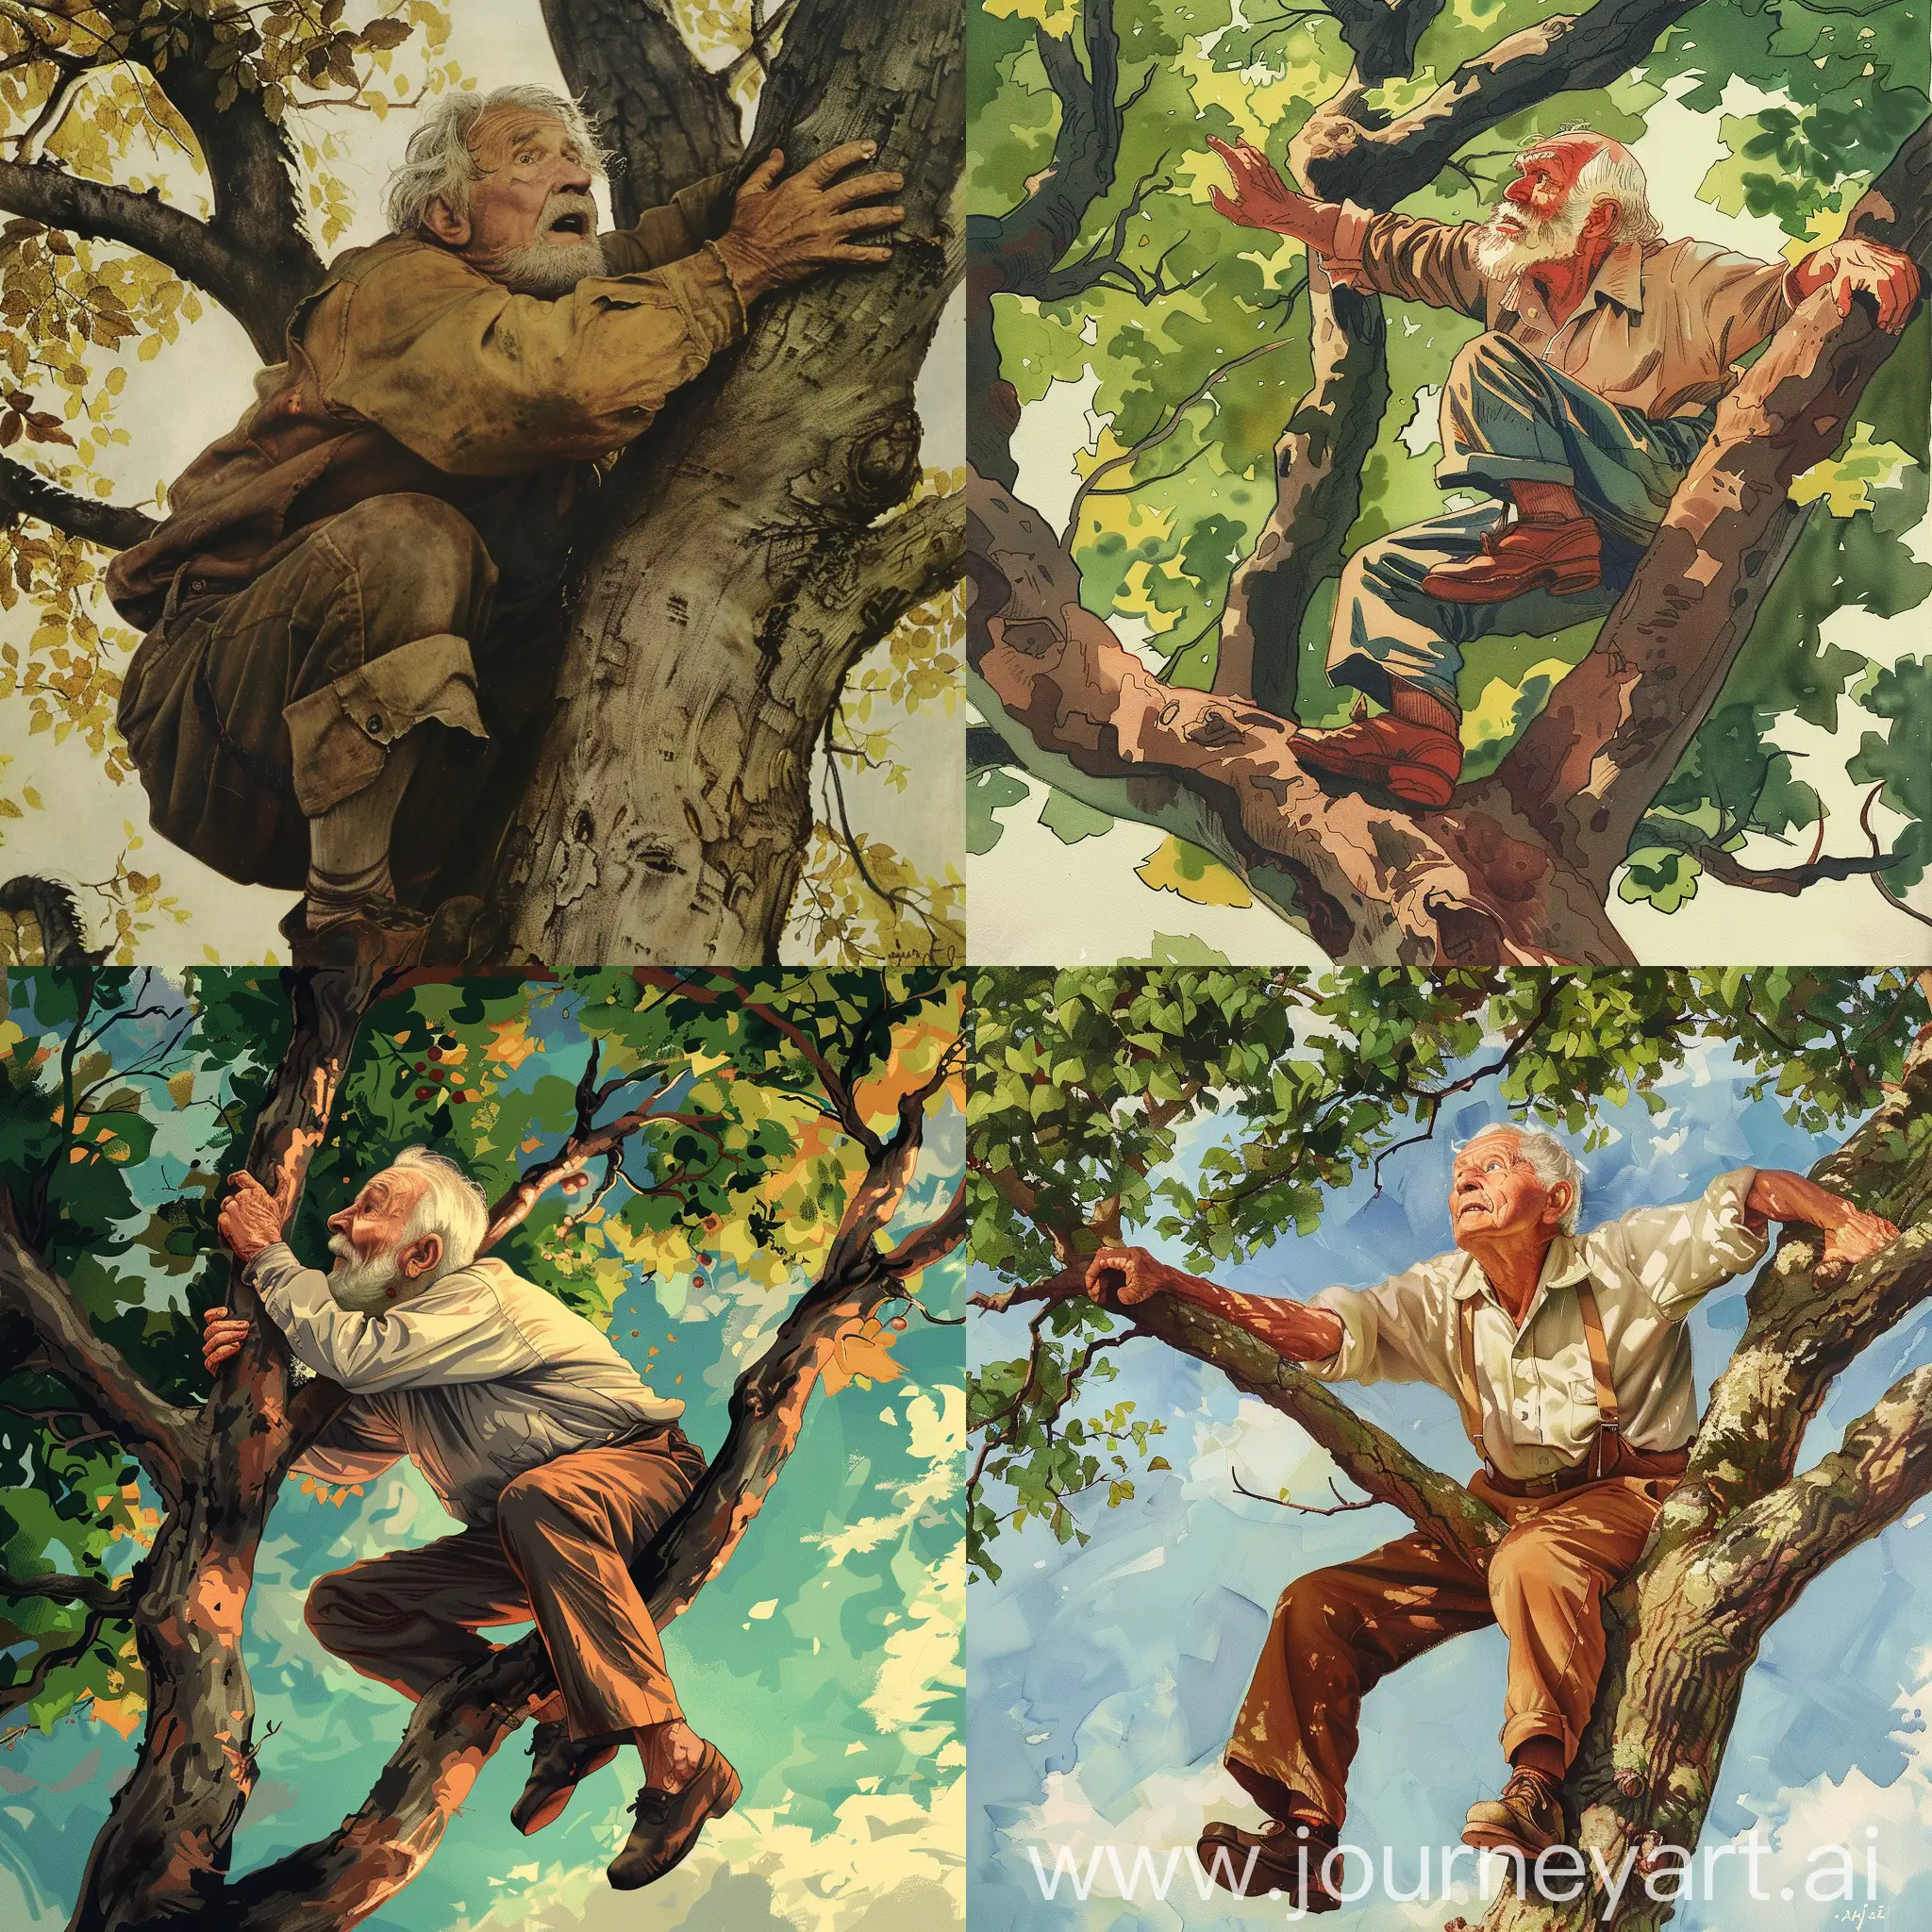 Elderly-Adventurer-Climbing-a-Towering-Tree